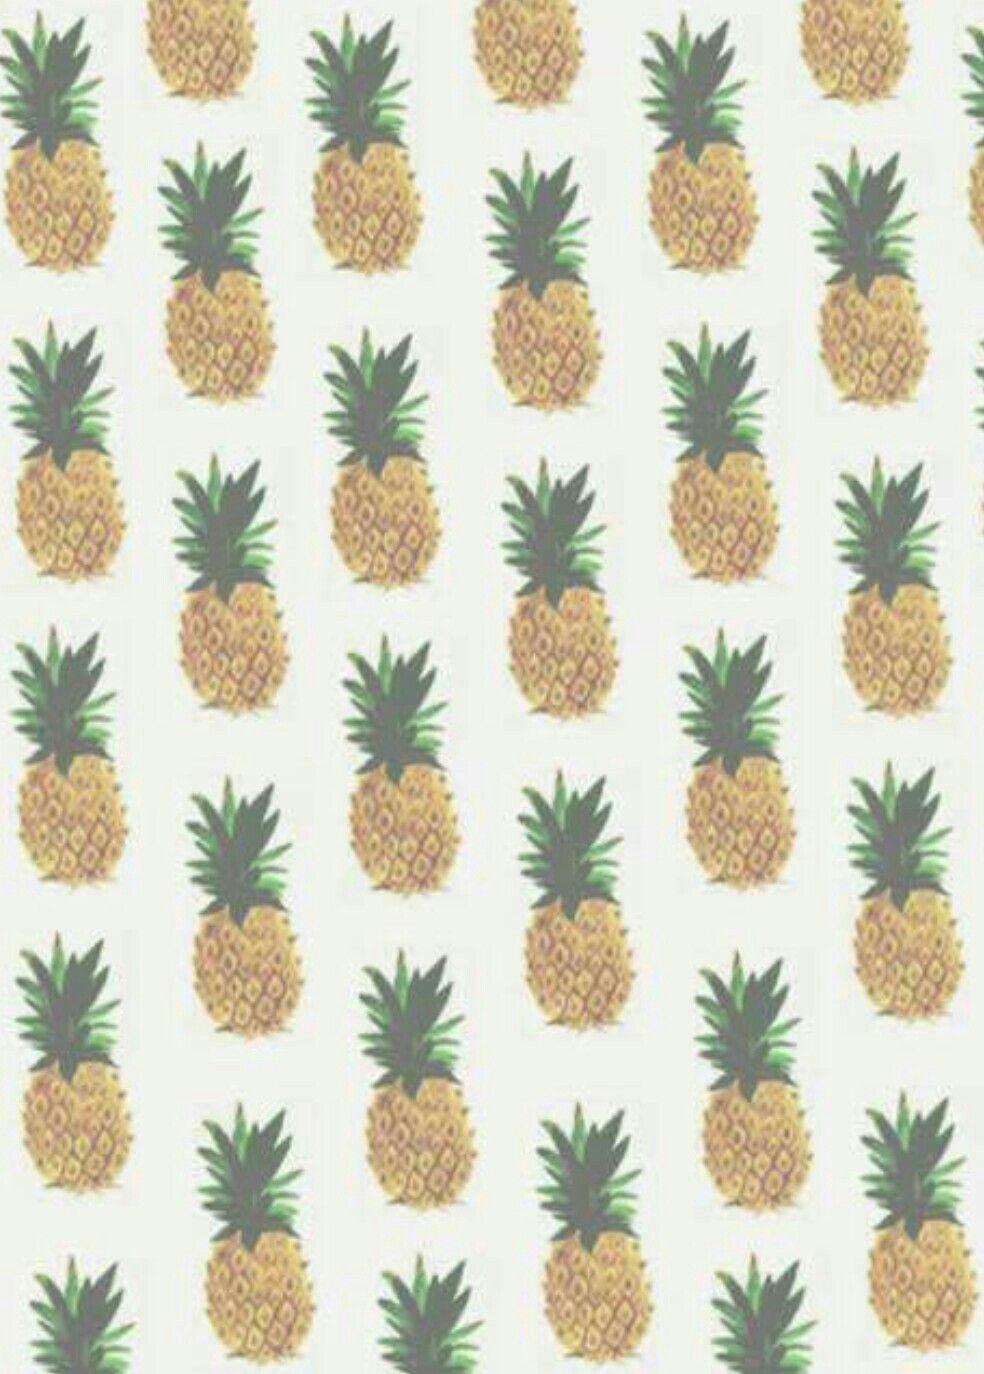 Pineapple Tumblr Wallpapers